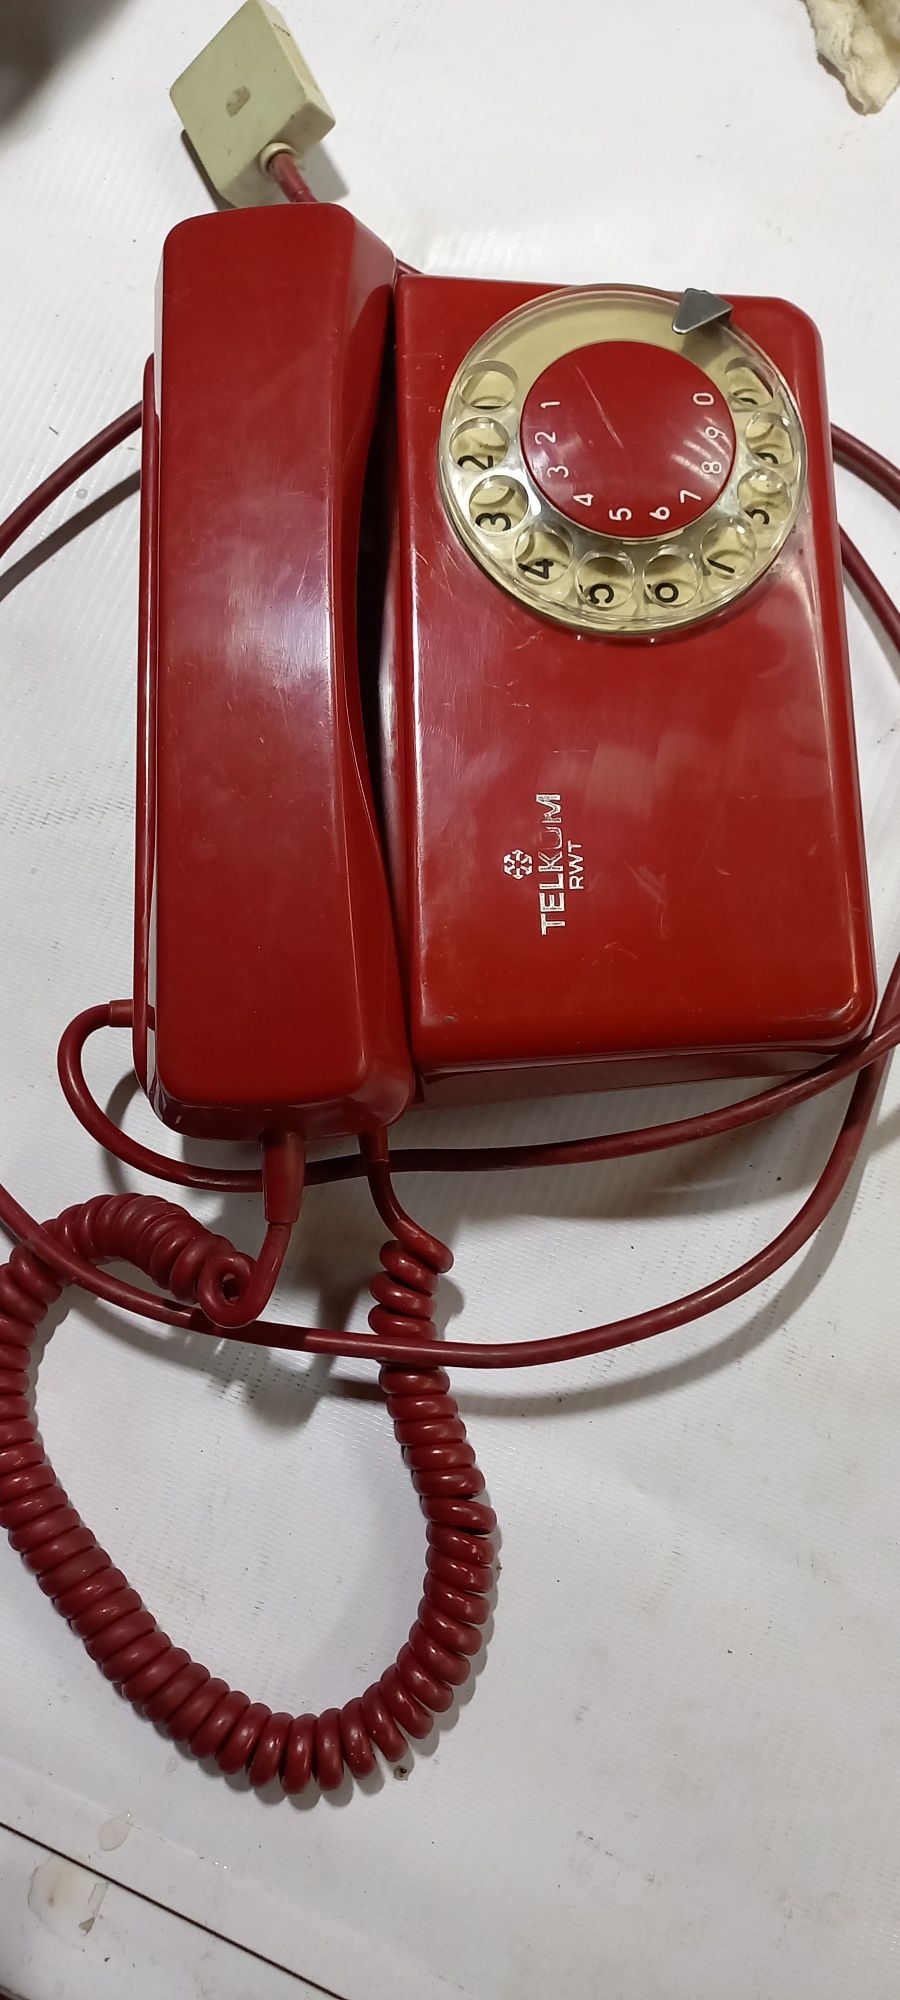 Prl stary telefon telkom rwt